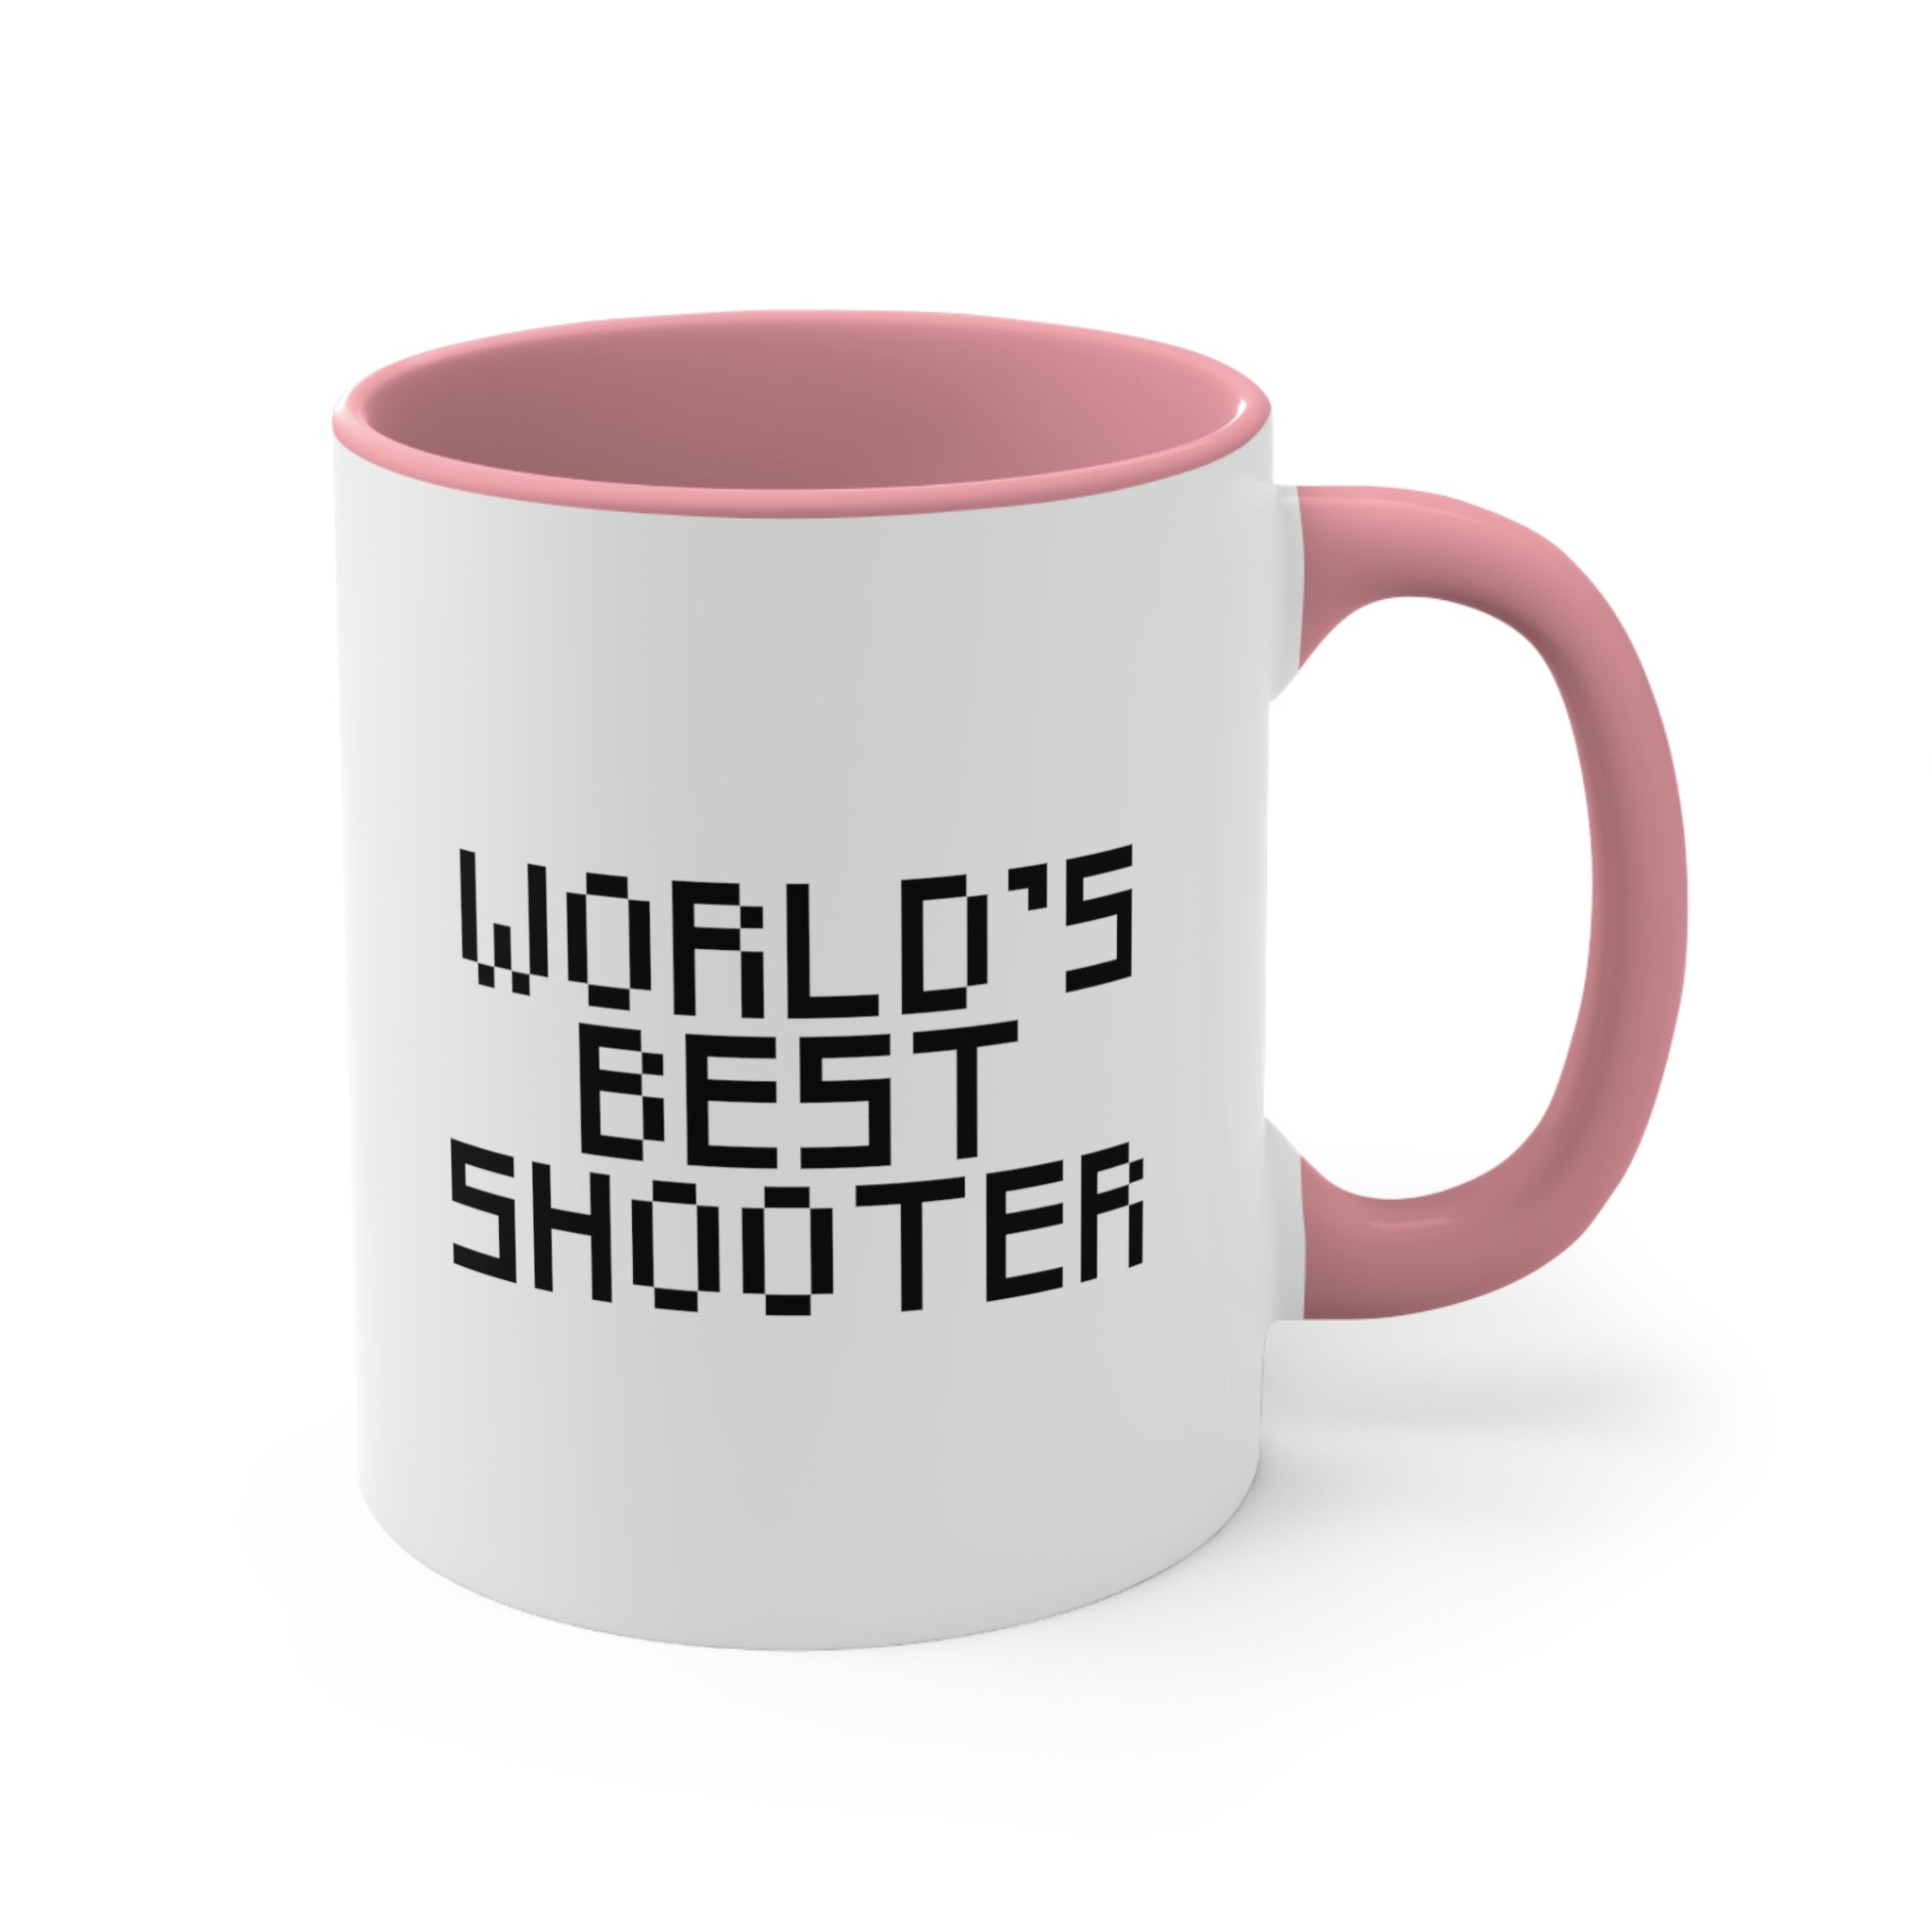 World's Best Shooter Accent Coffee Mug, 11oz